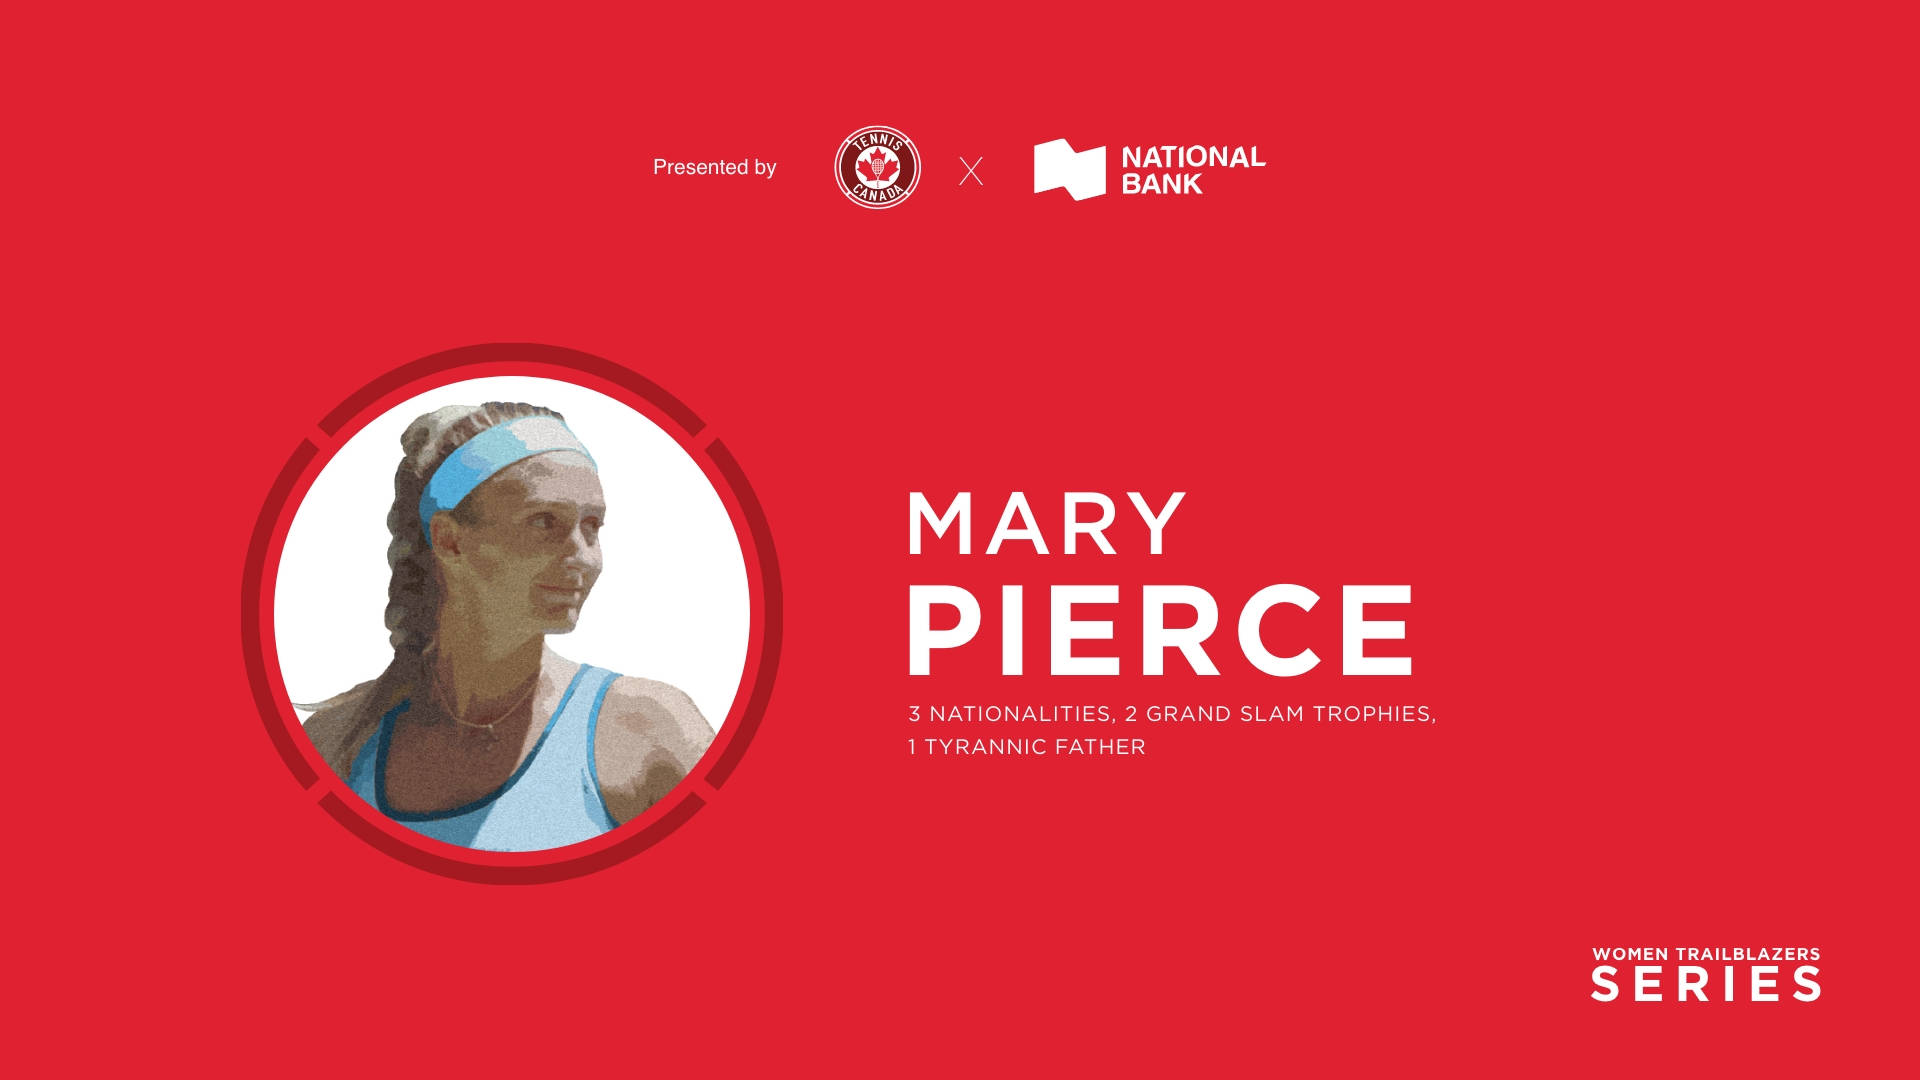 Mary Pierce 1920 X 1080 Wallpaper